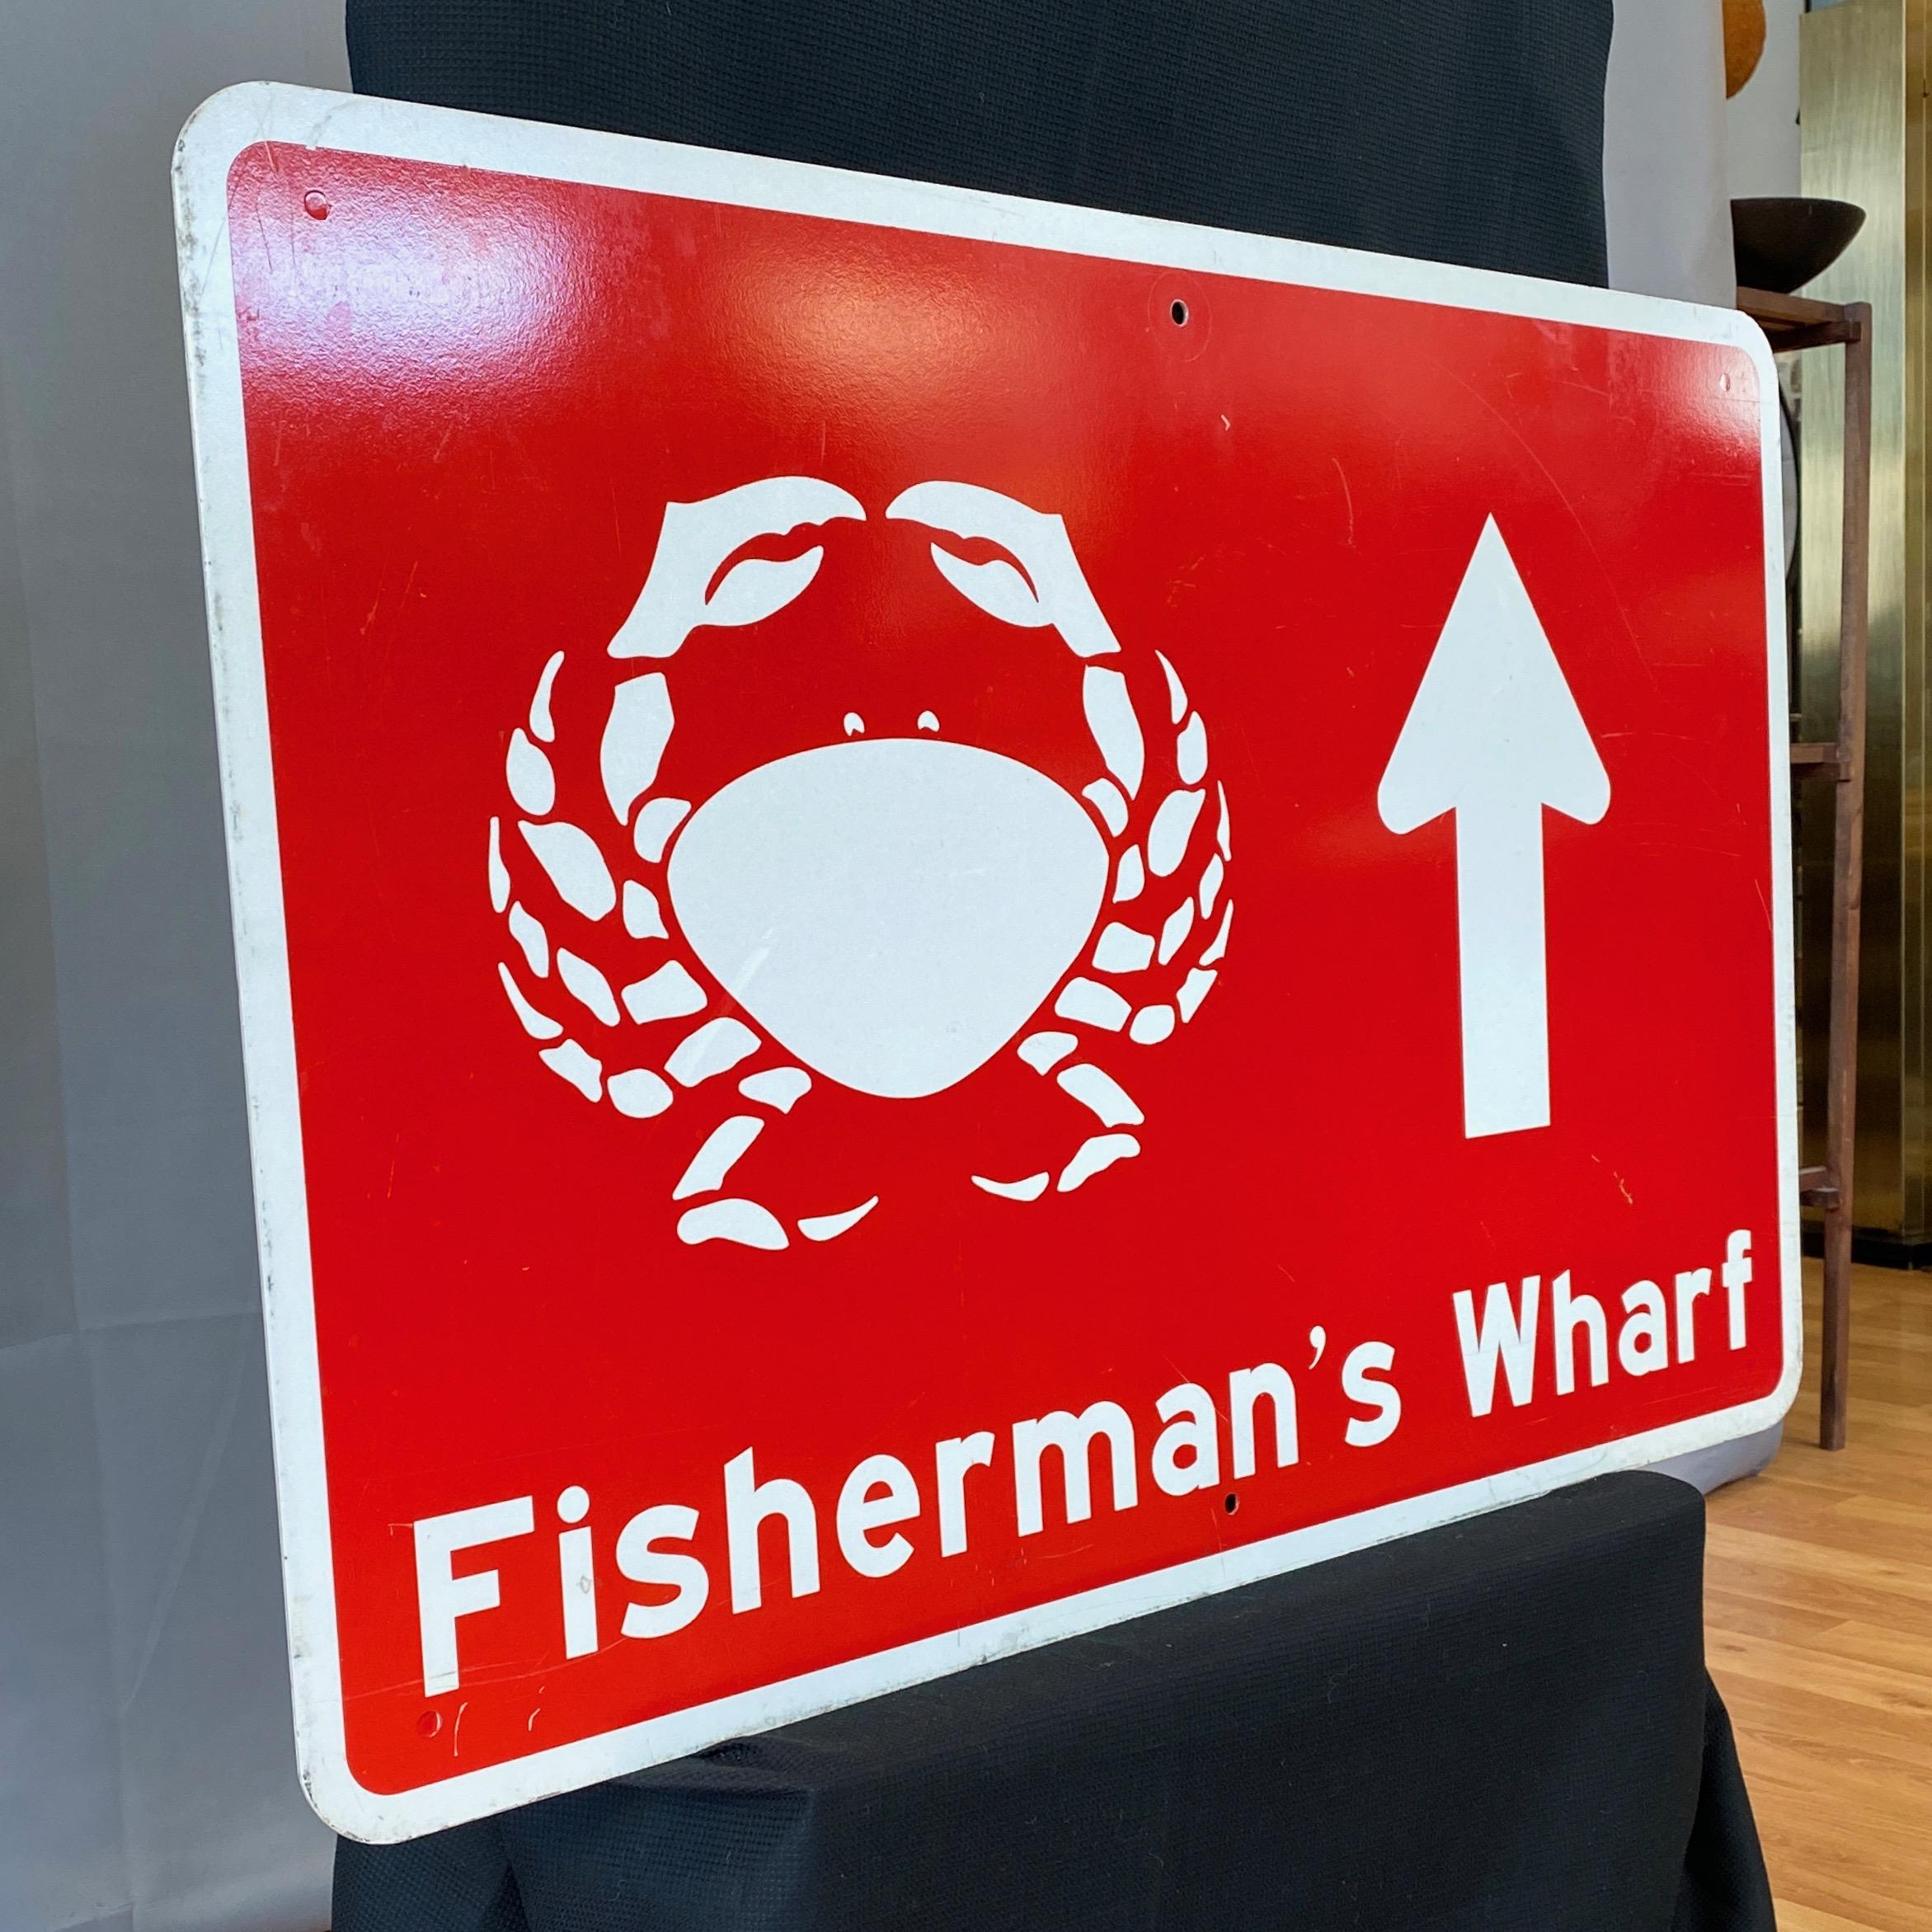 fisherman's wharf sign